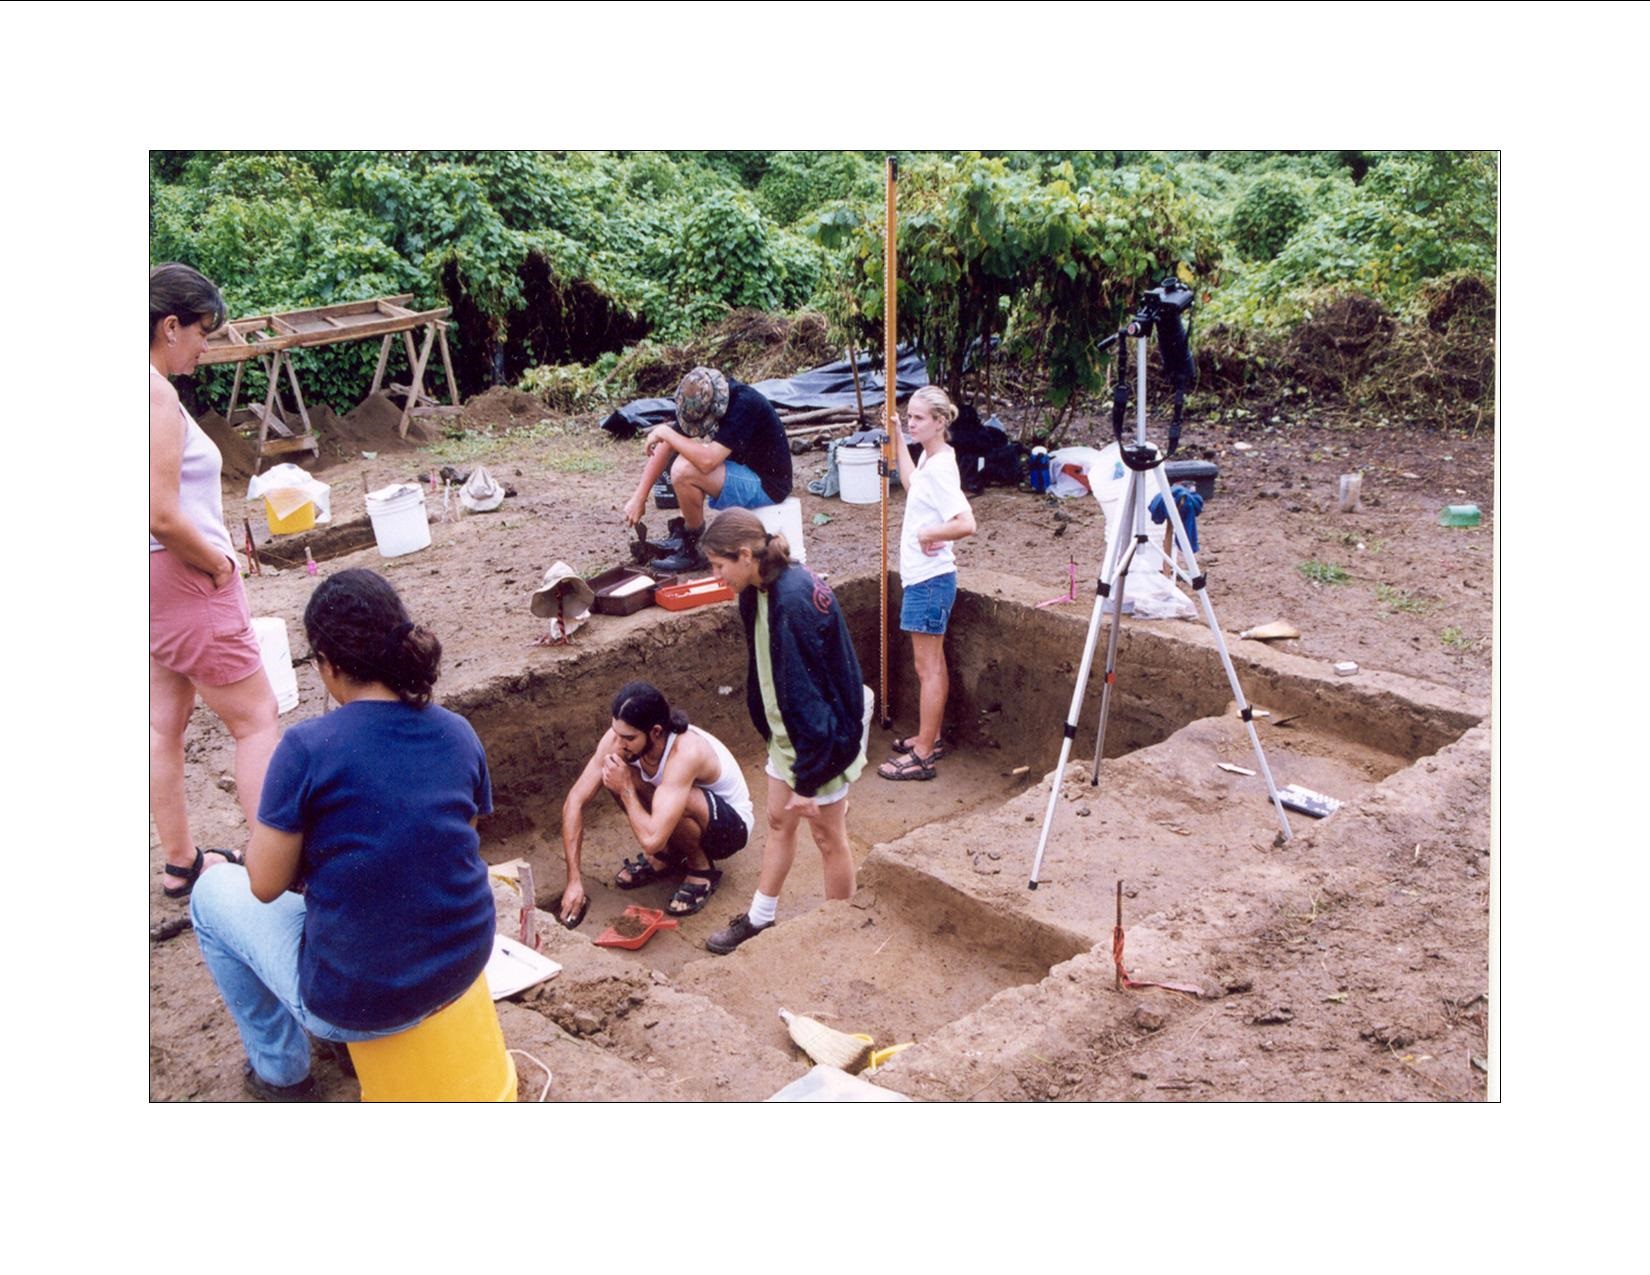 Student field work in Ecuador